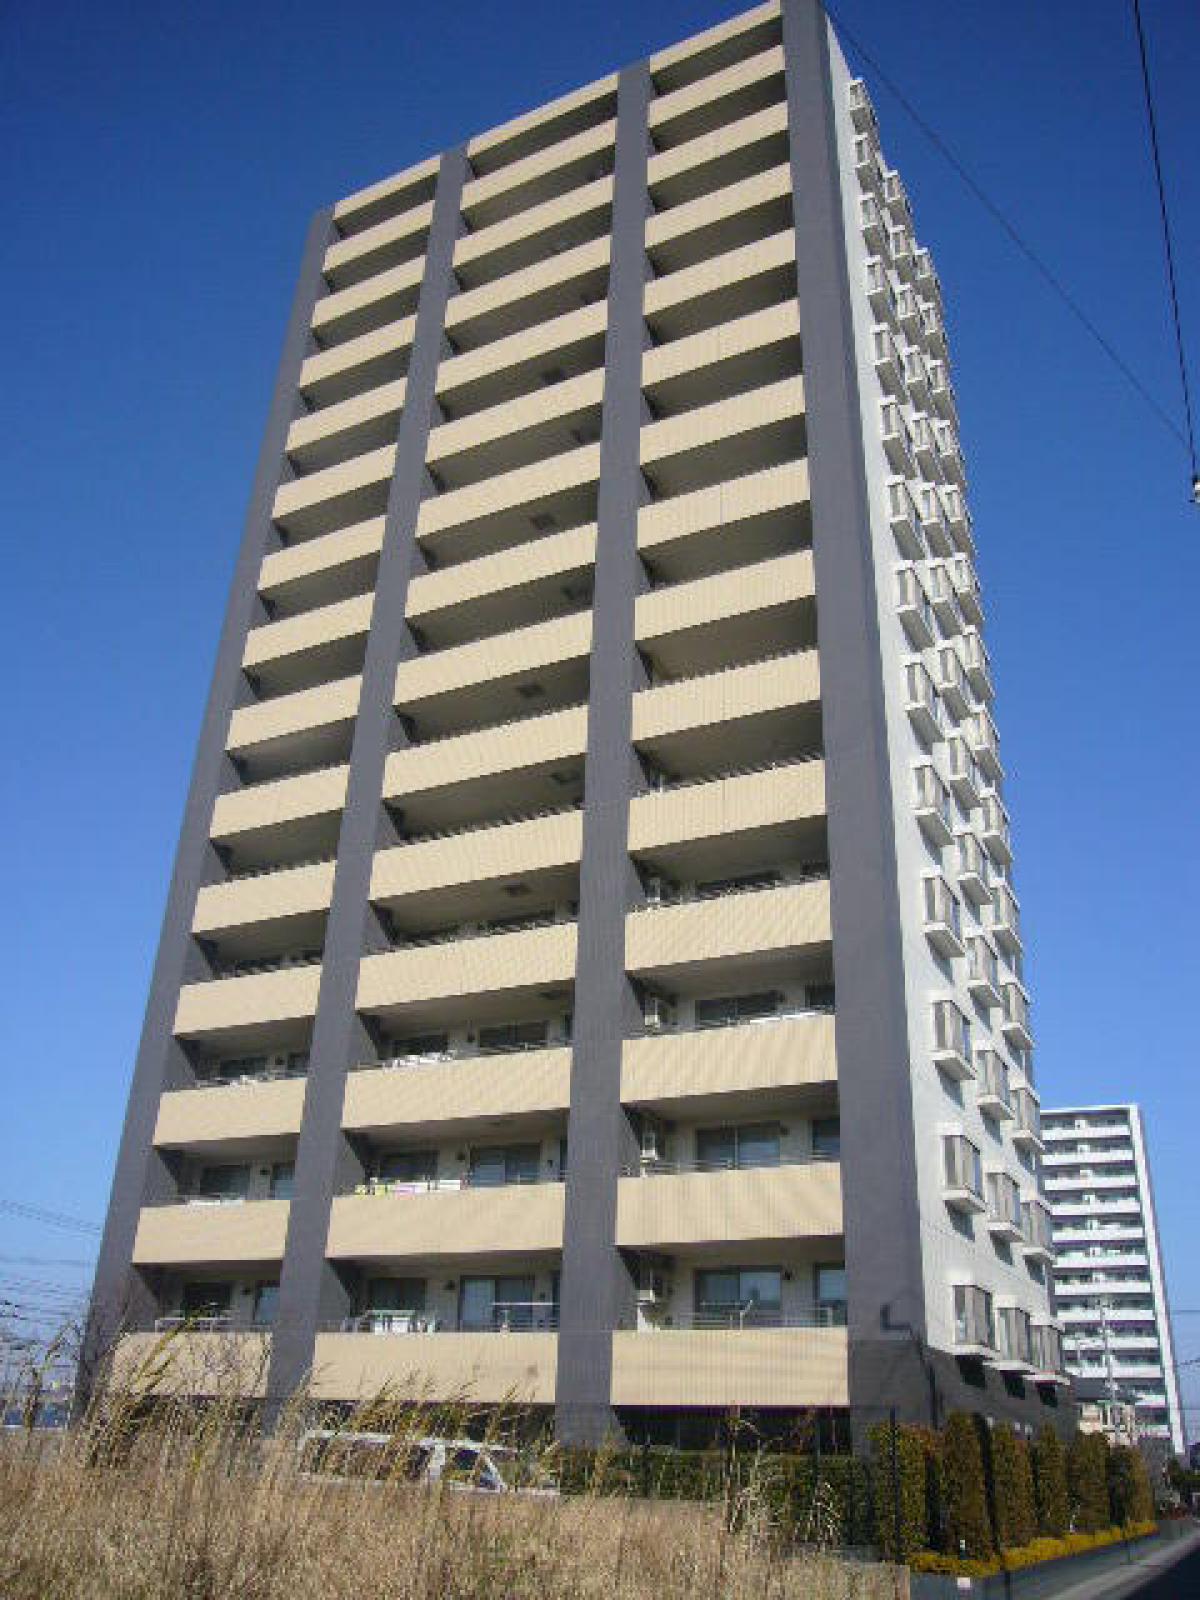 Picture of Apartment For Sale in Yashio Shi, Saitama, Japan